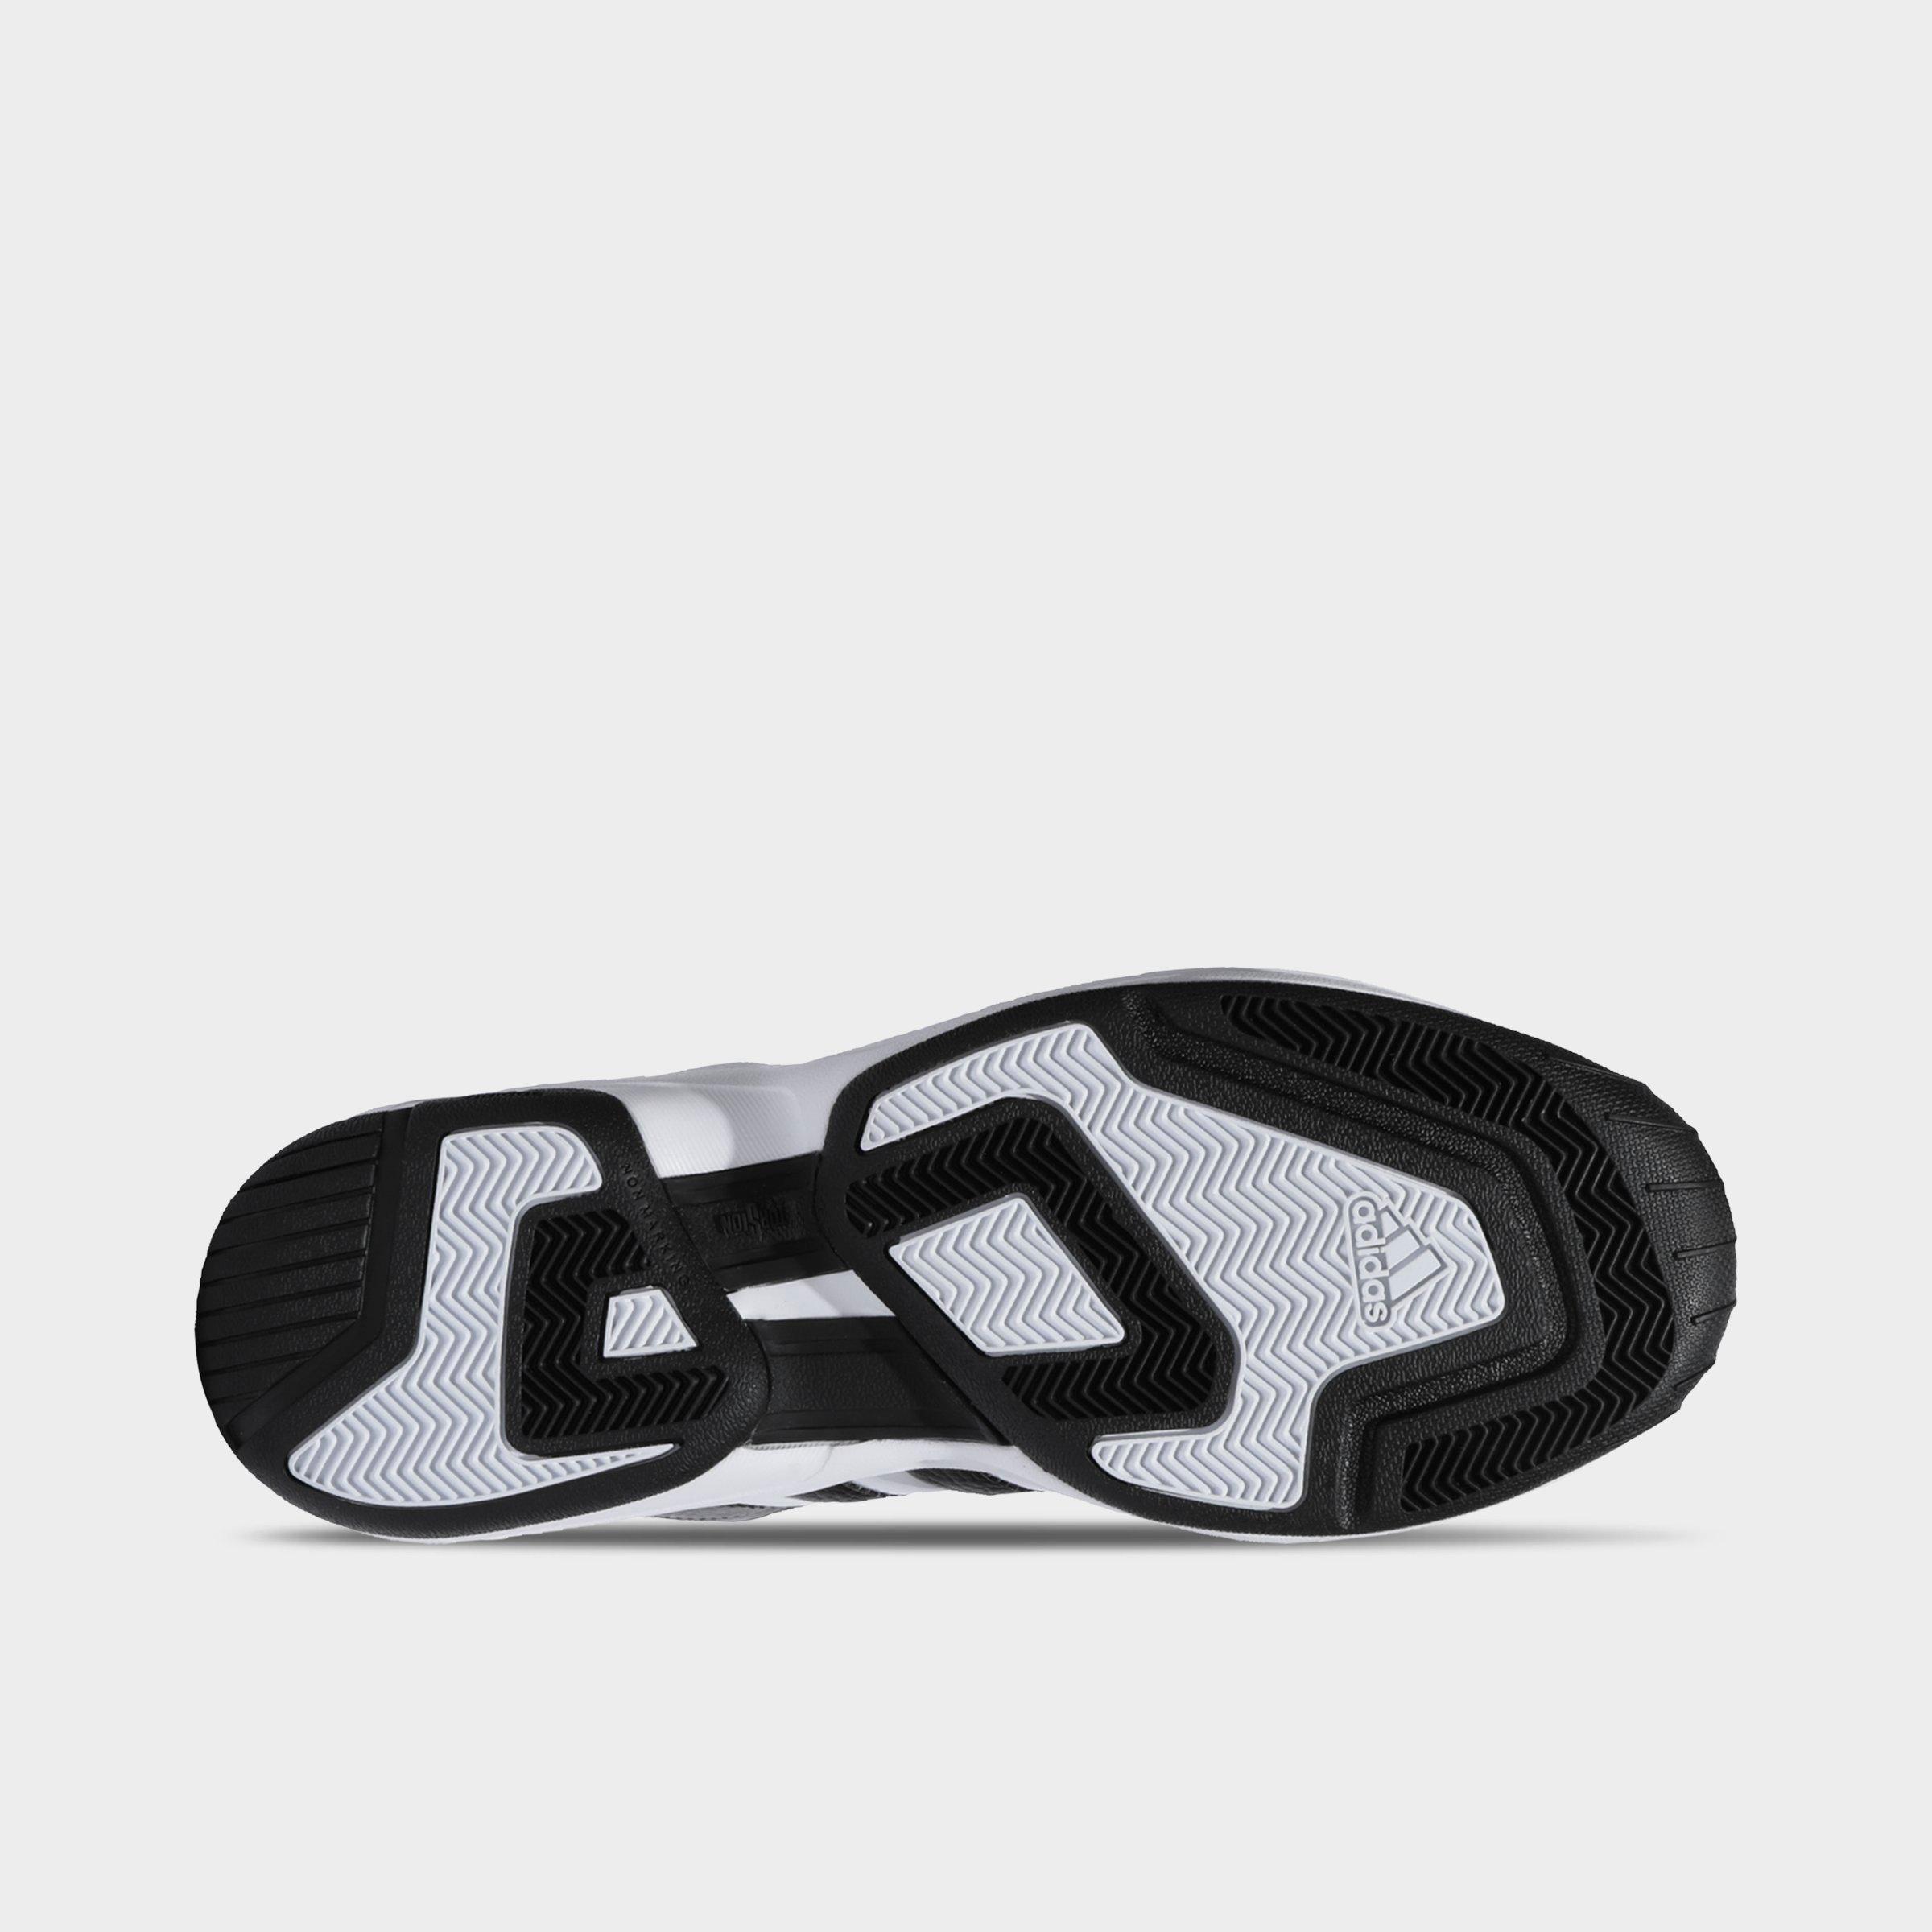 adidas basketball shoes pro model